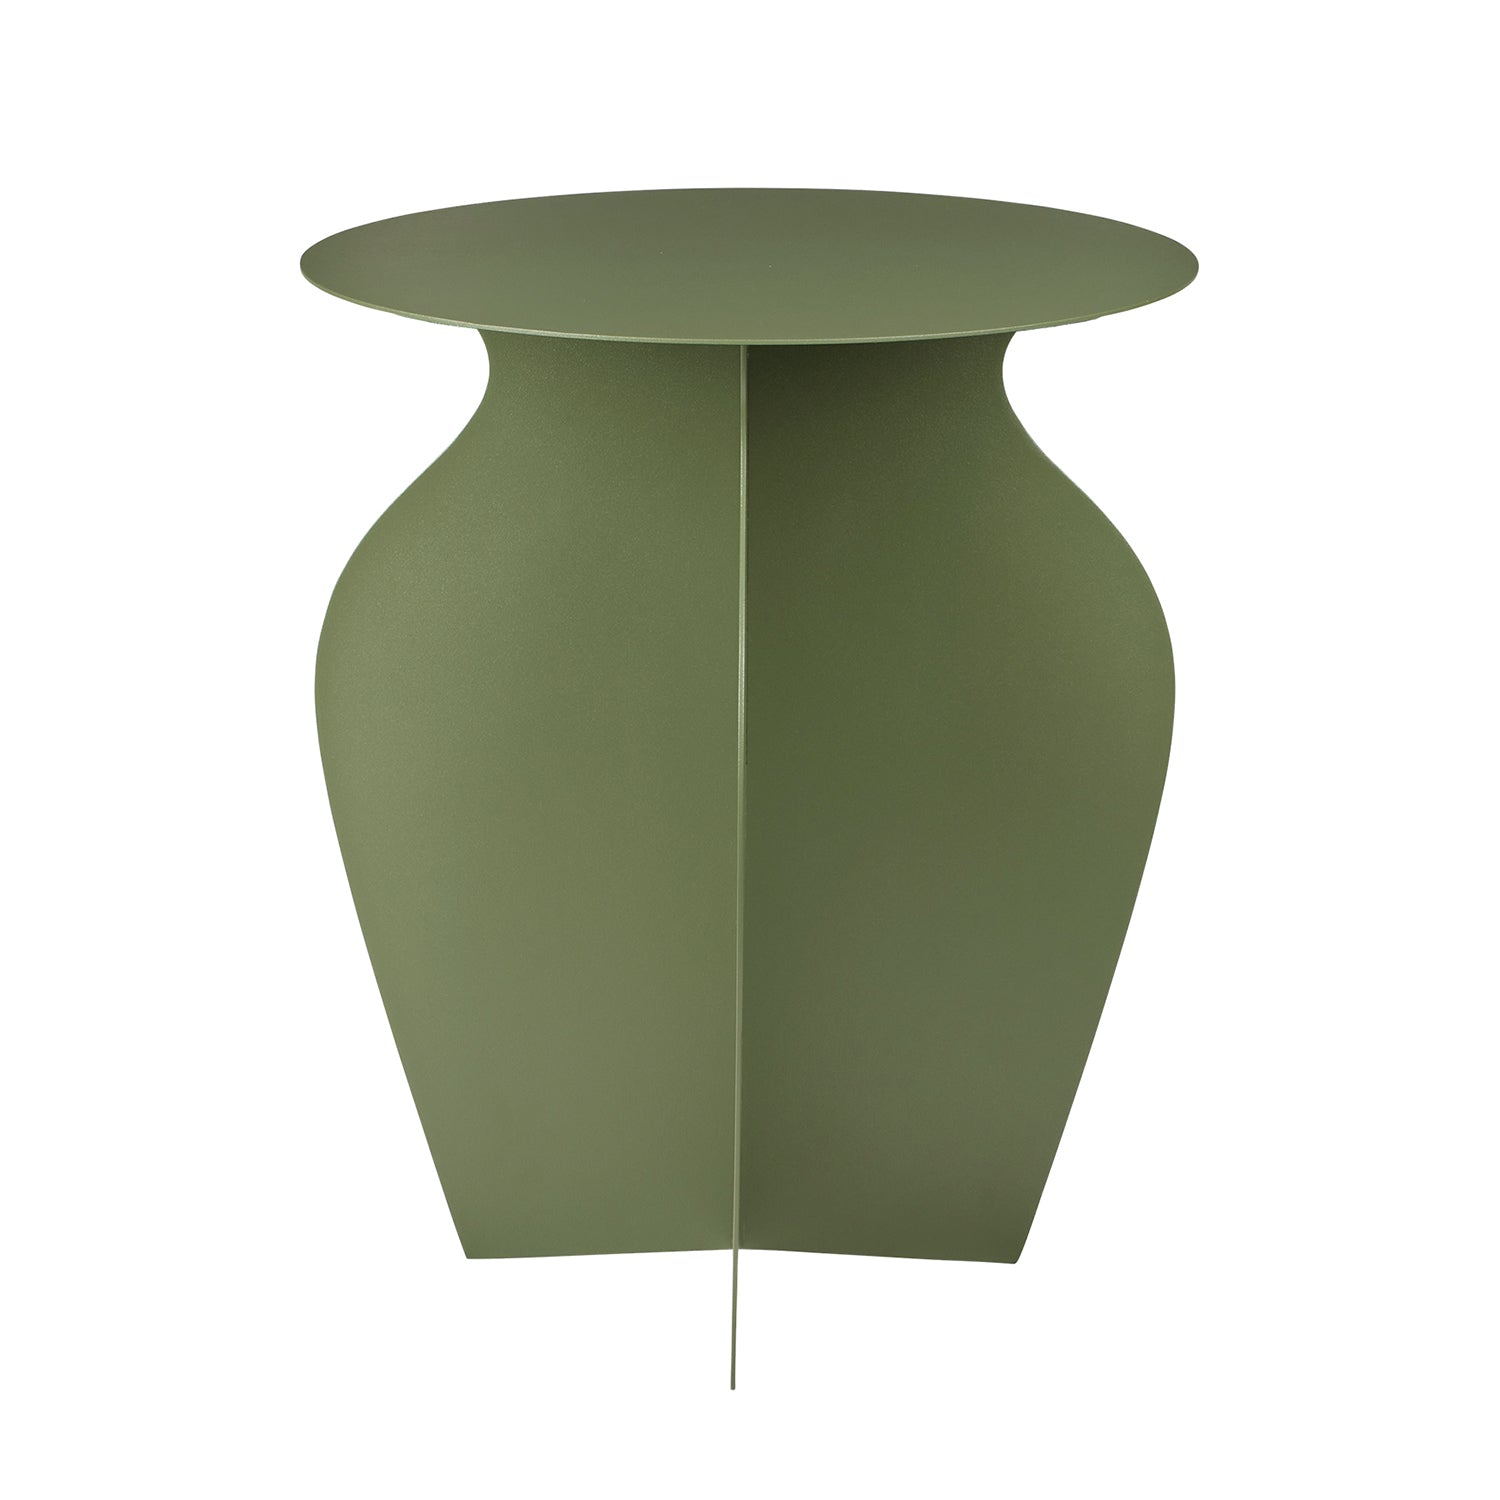 Urna Table - The Design Choice